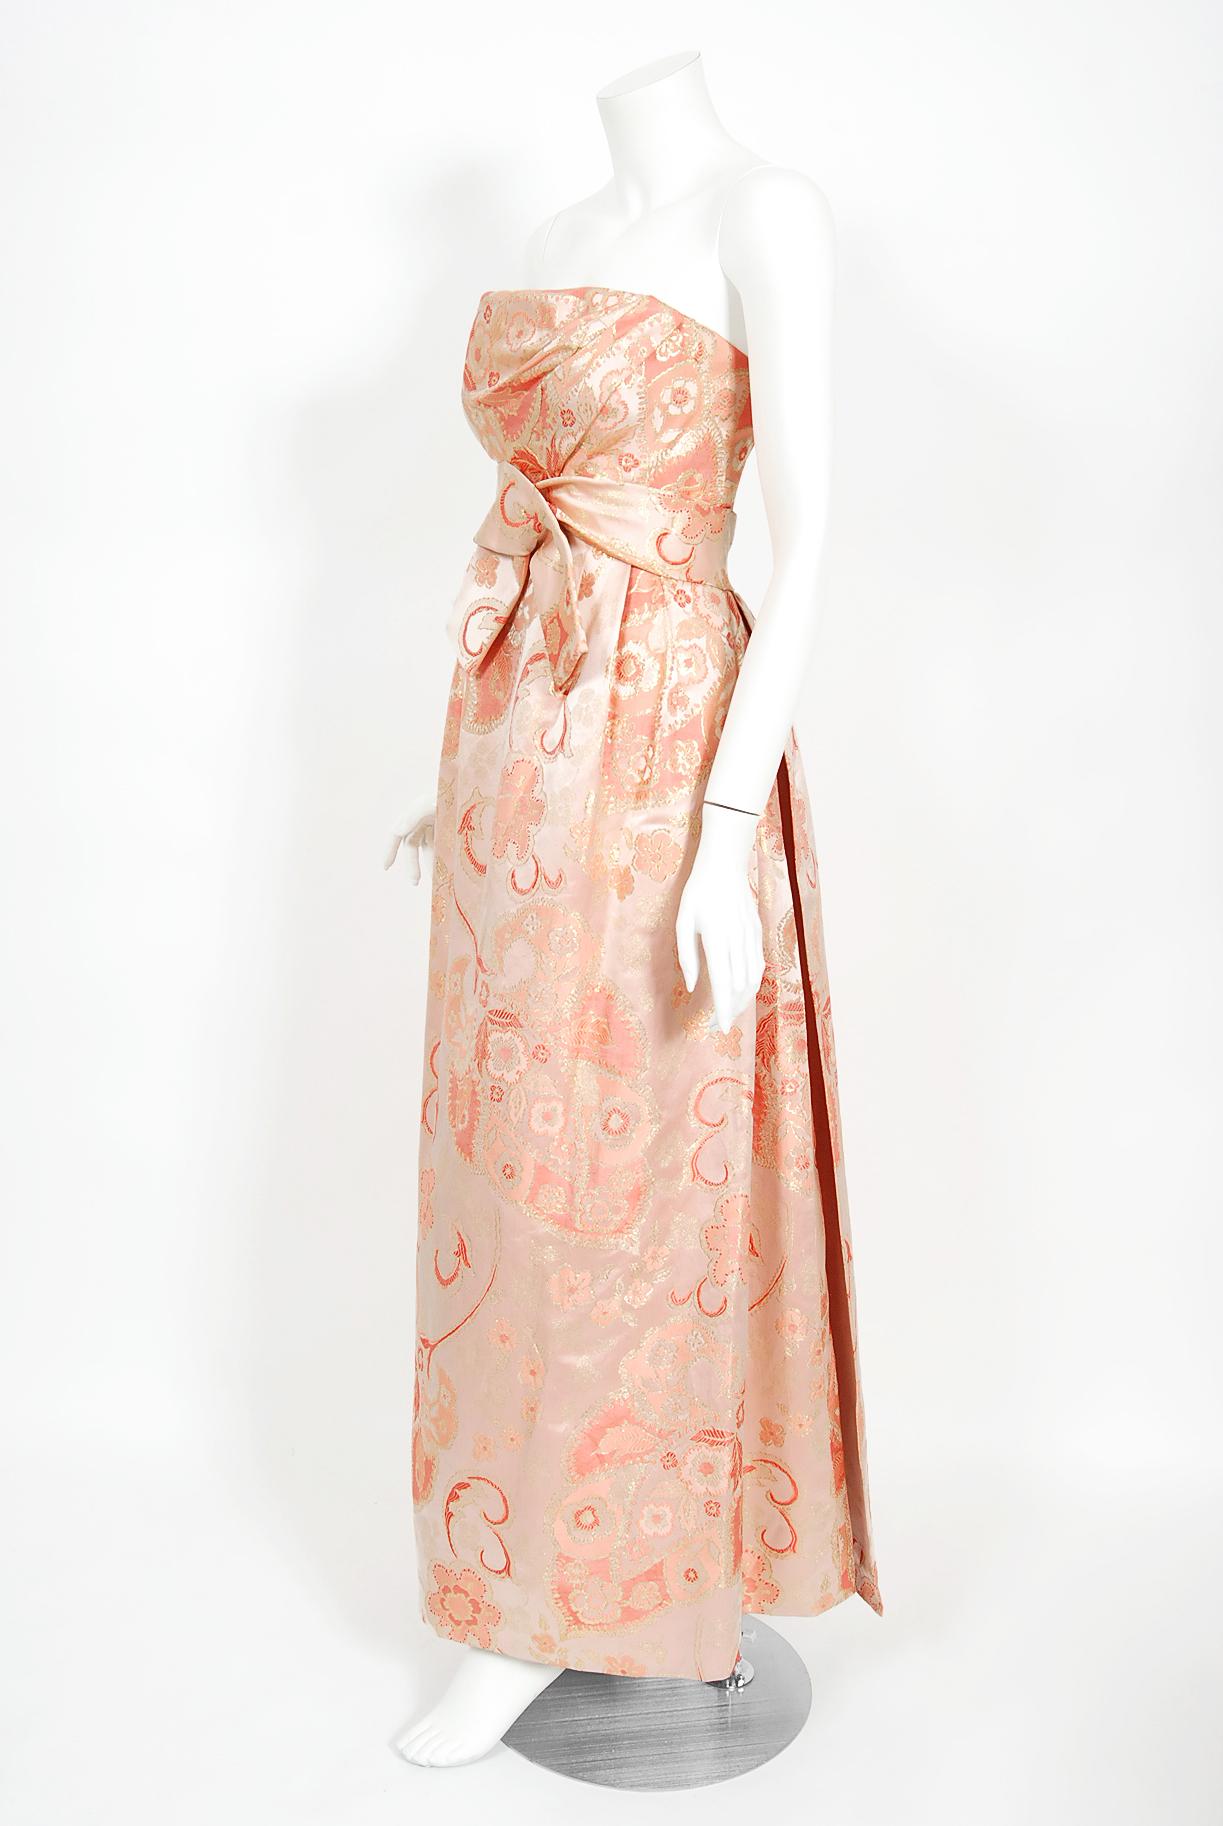 Women's Vintage 1963 Pierre Balmain Couture Documented Metallic Pink Silk Strapless Gown